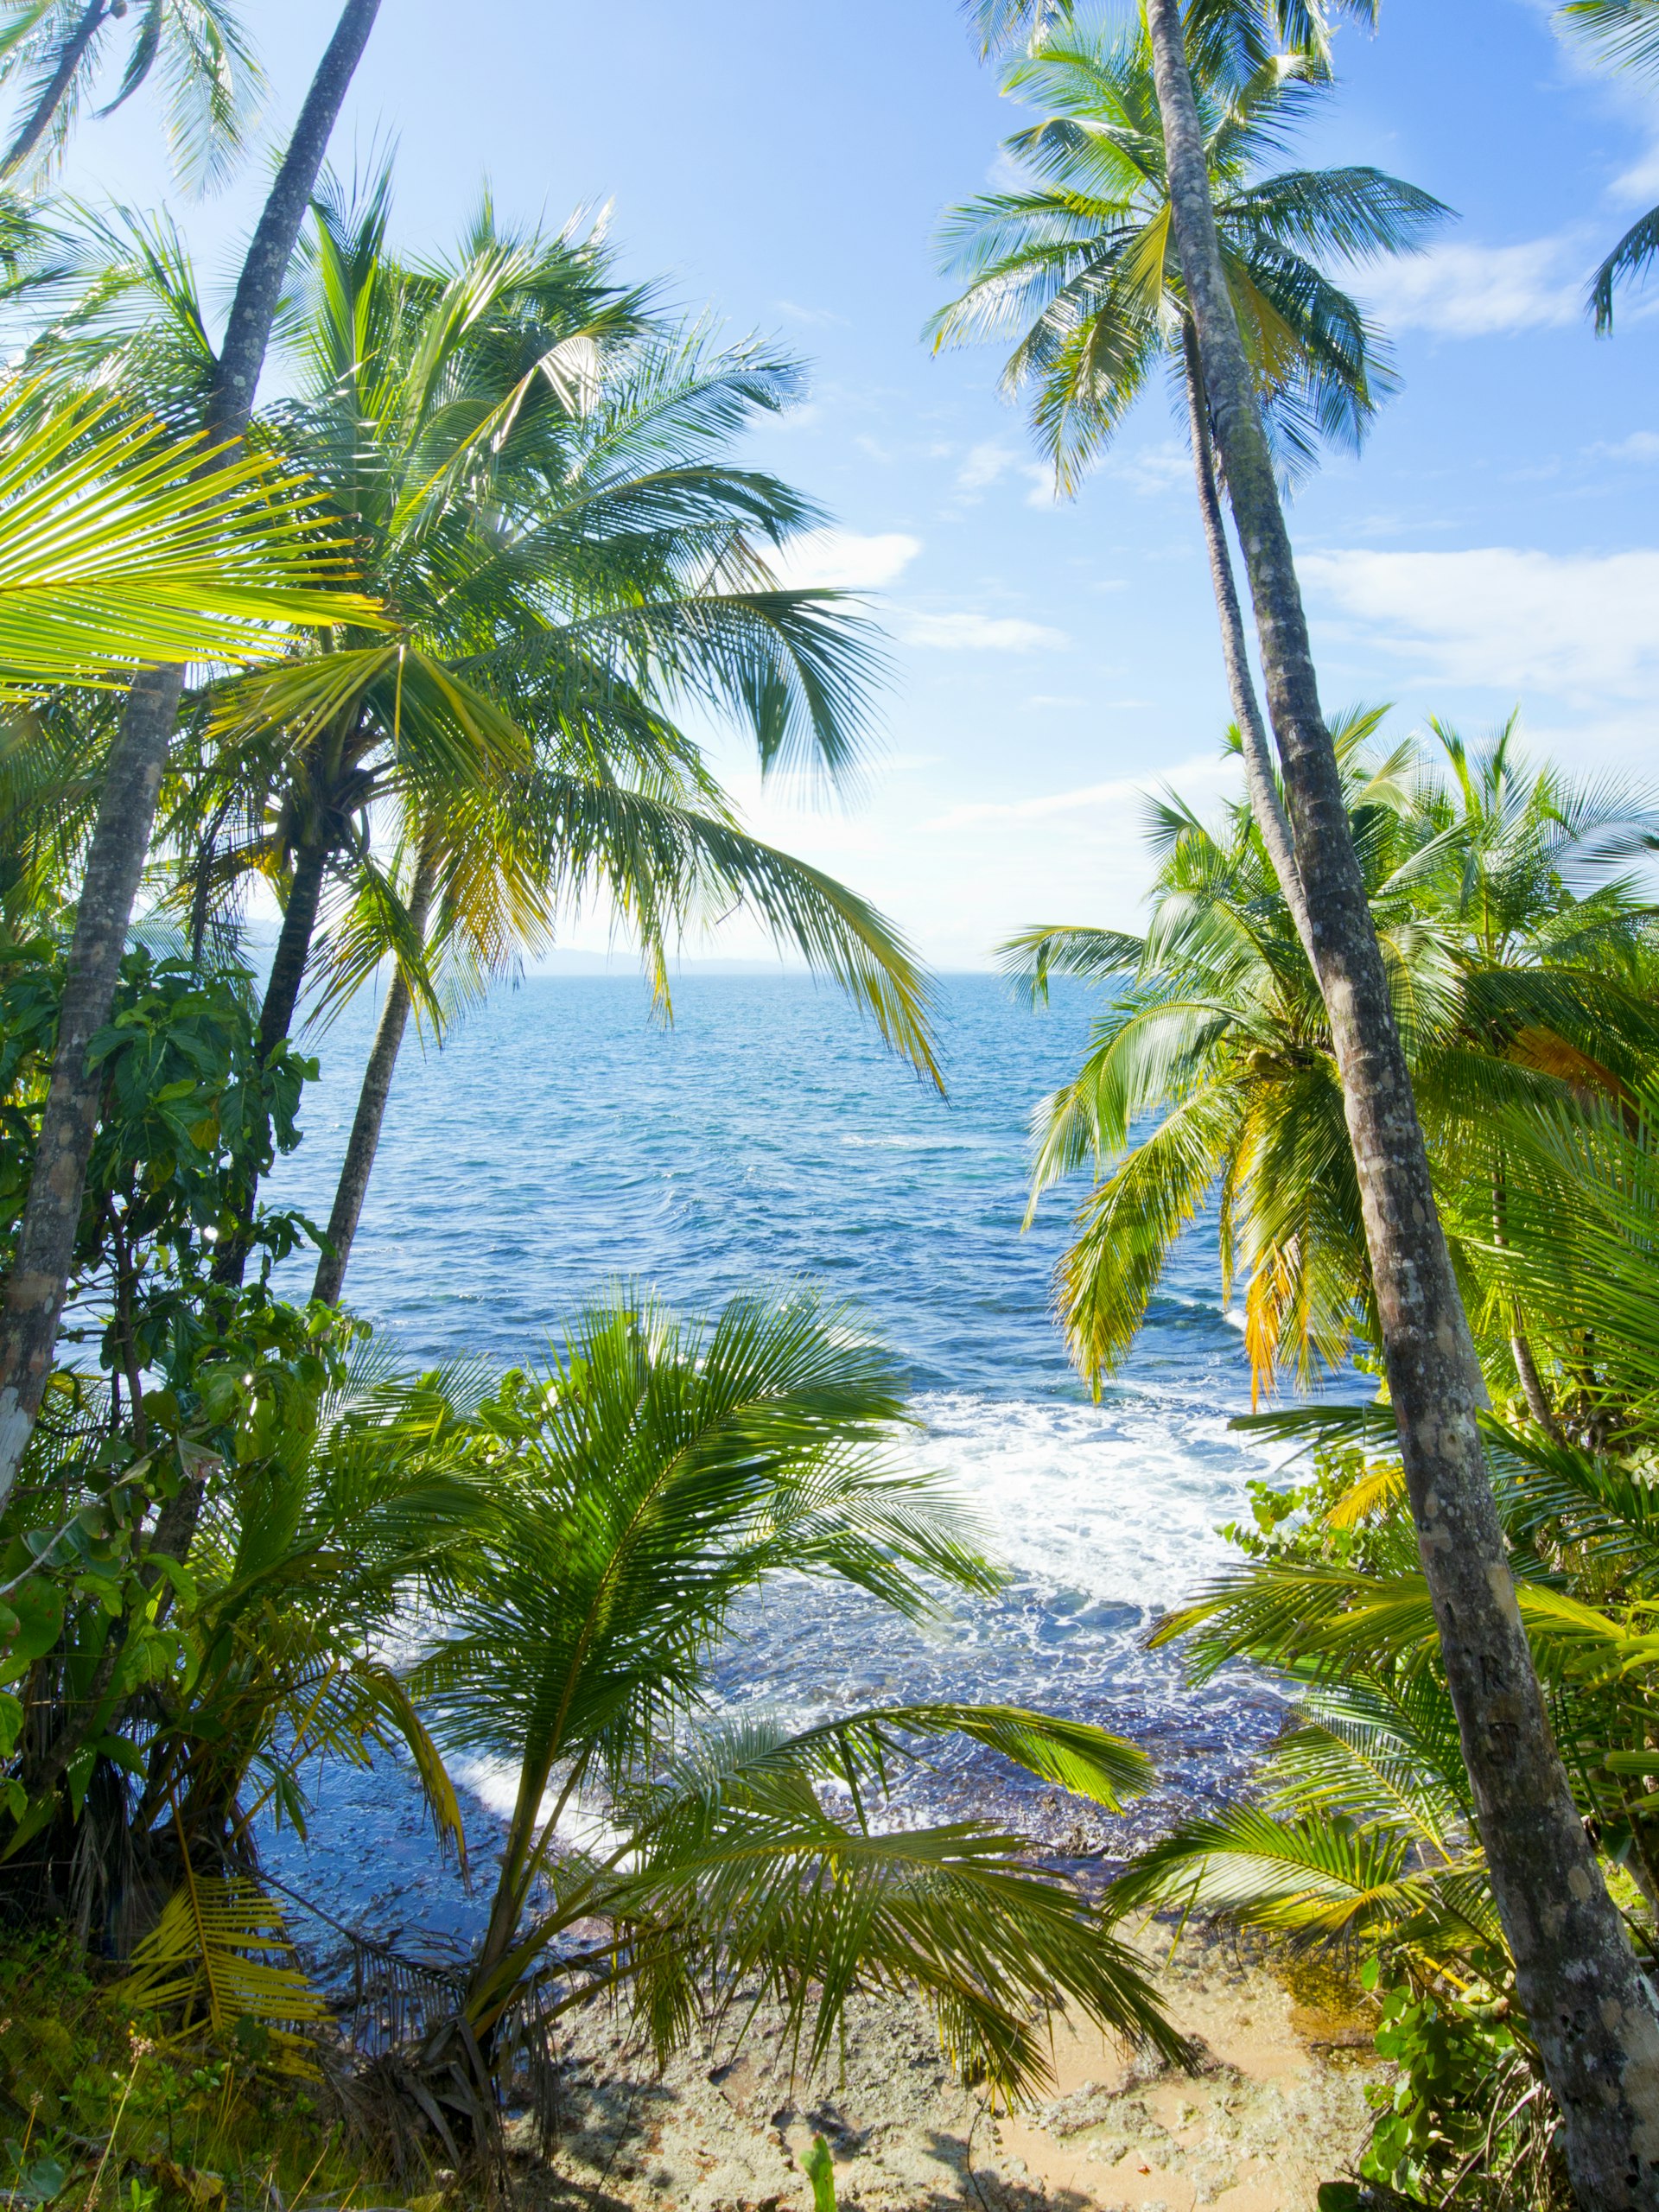 Palm trees frame the Caribbean sea in Manzanillo